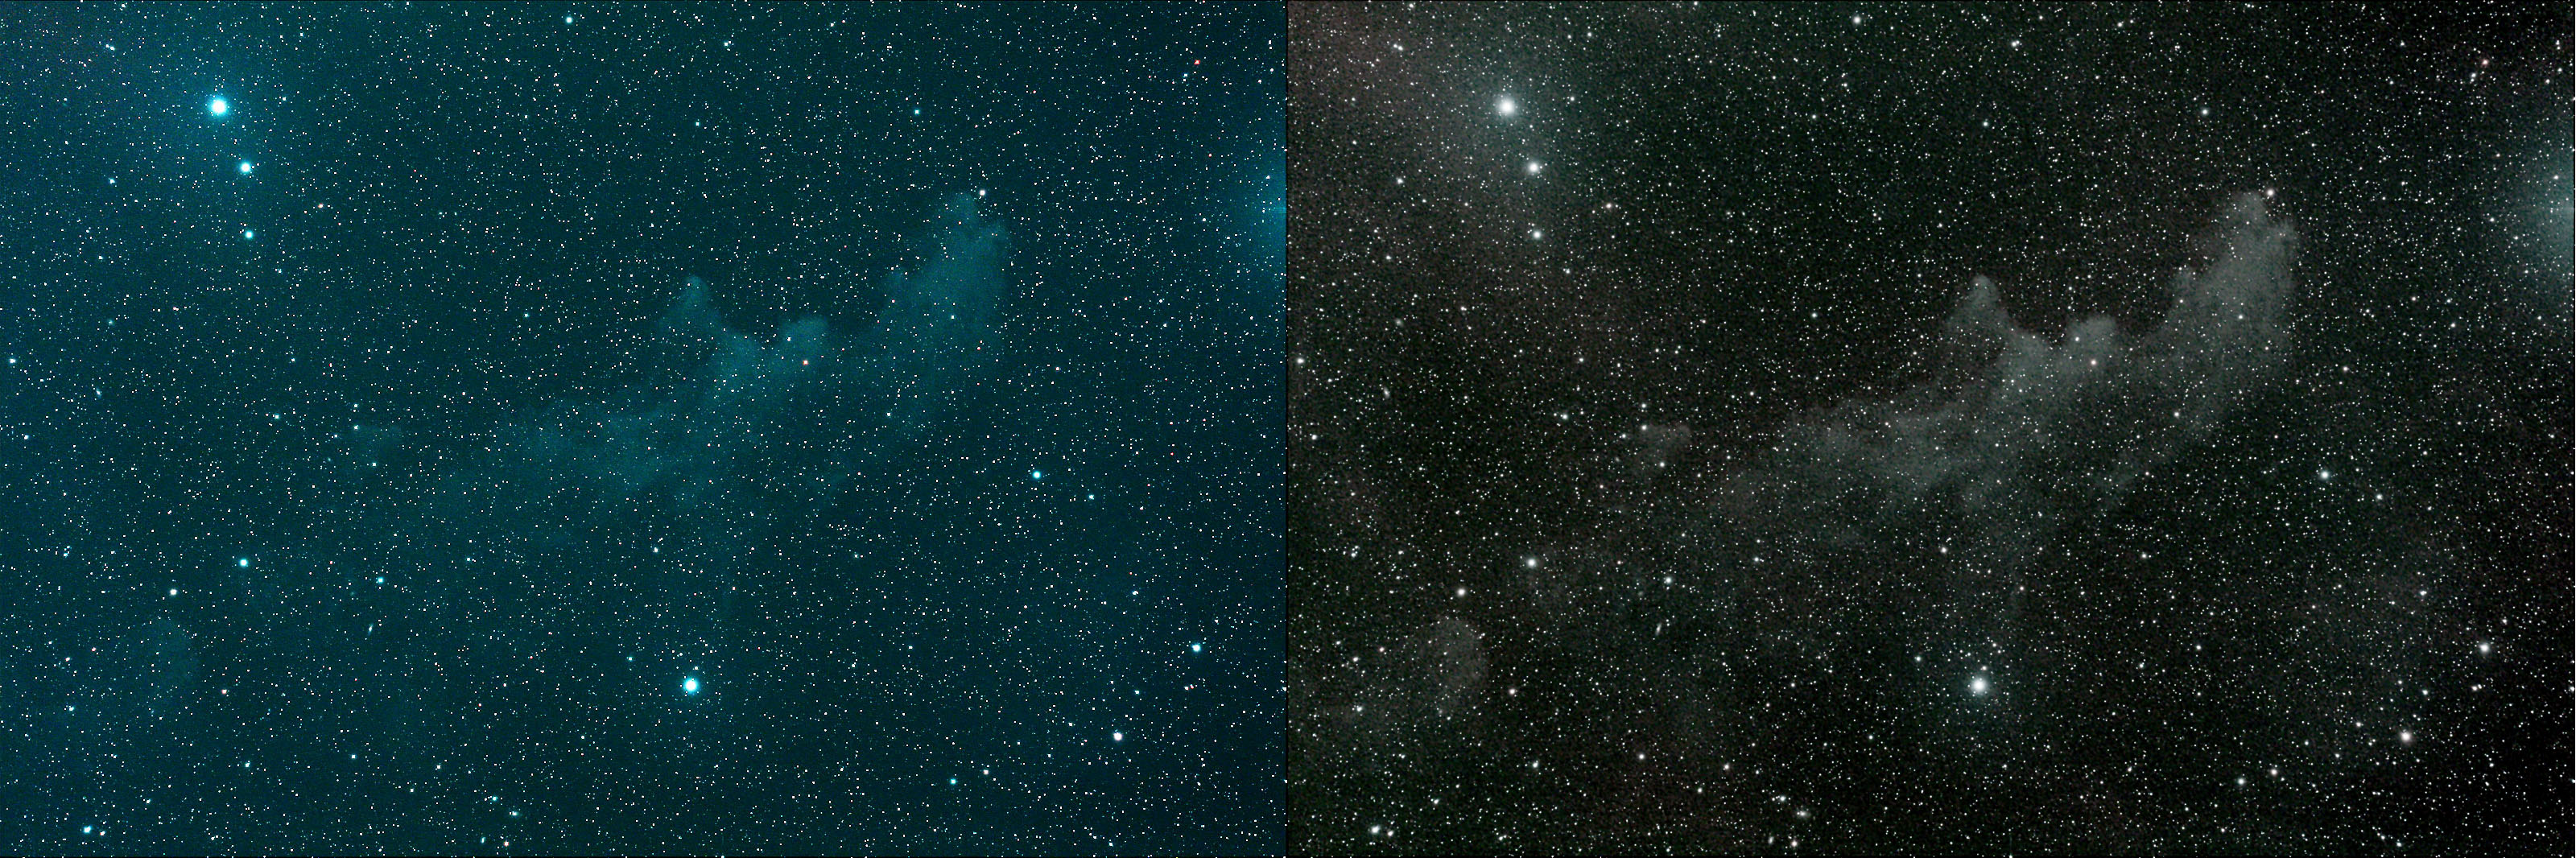 Witch Head Nebula_Comparison.jpg